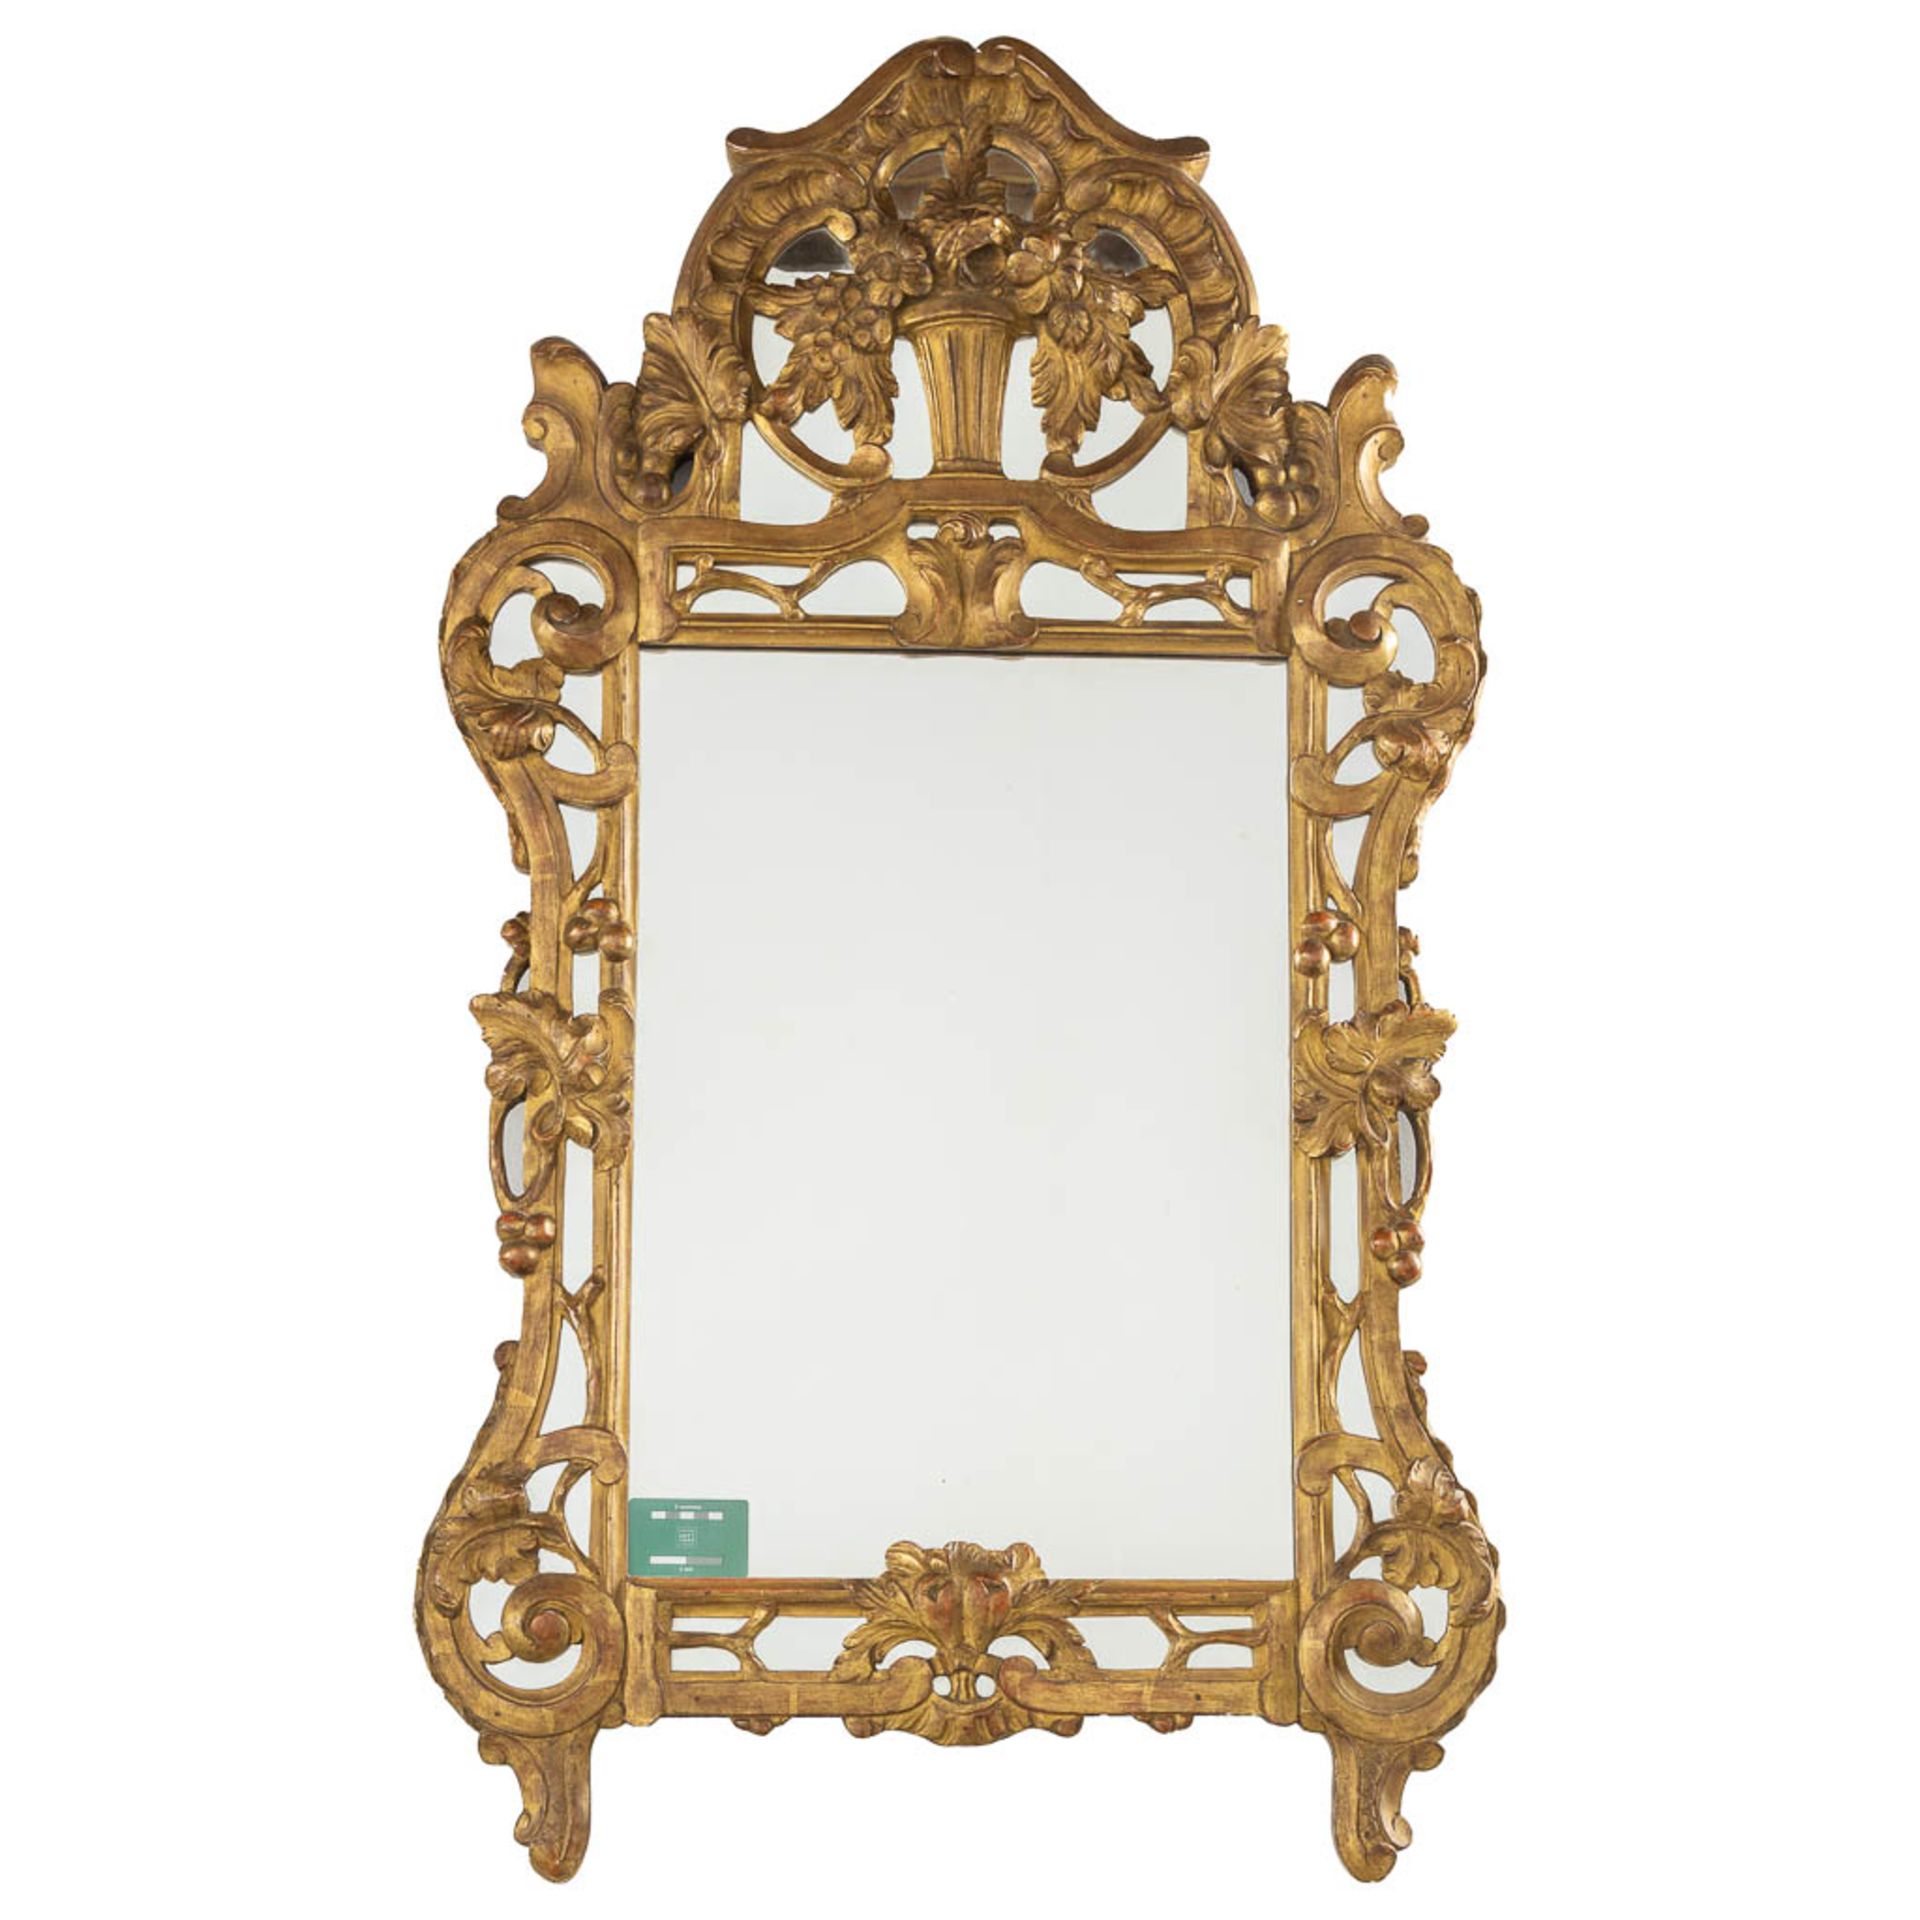 An antique, wood-sculptured and gilt mirror, France, 20th C. (W:74 x H:130 cm) - Bild 2 aus 7